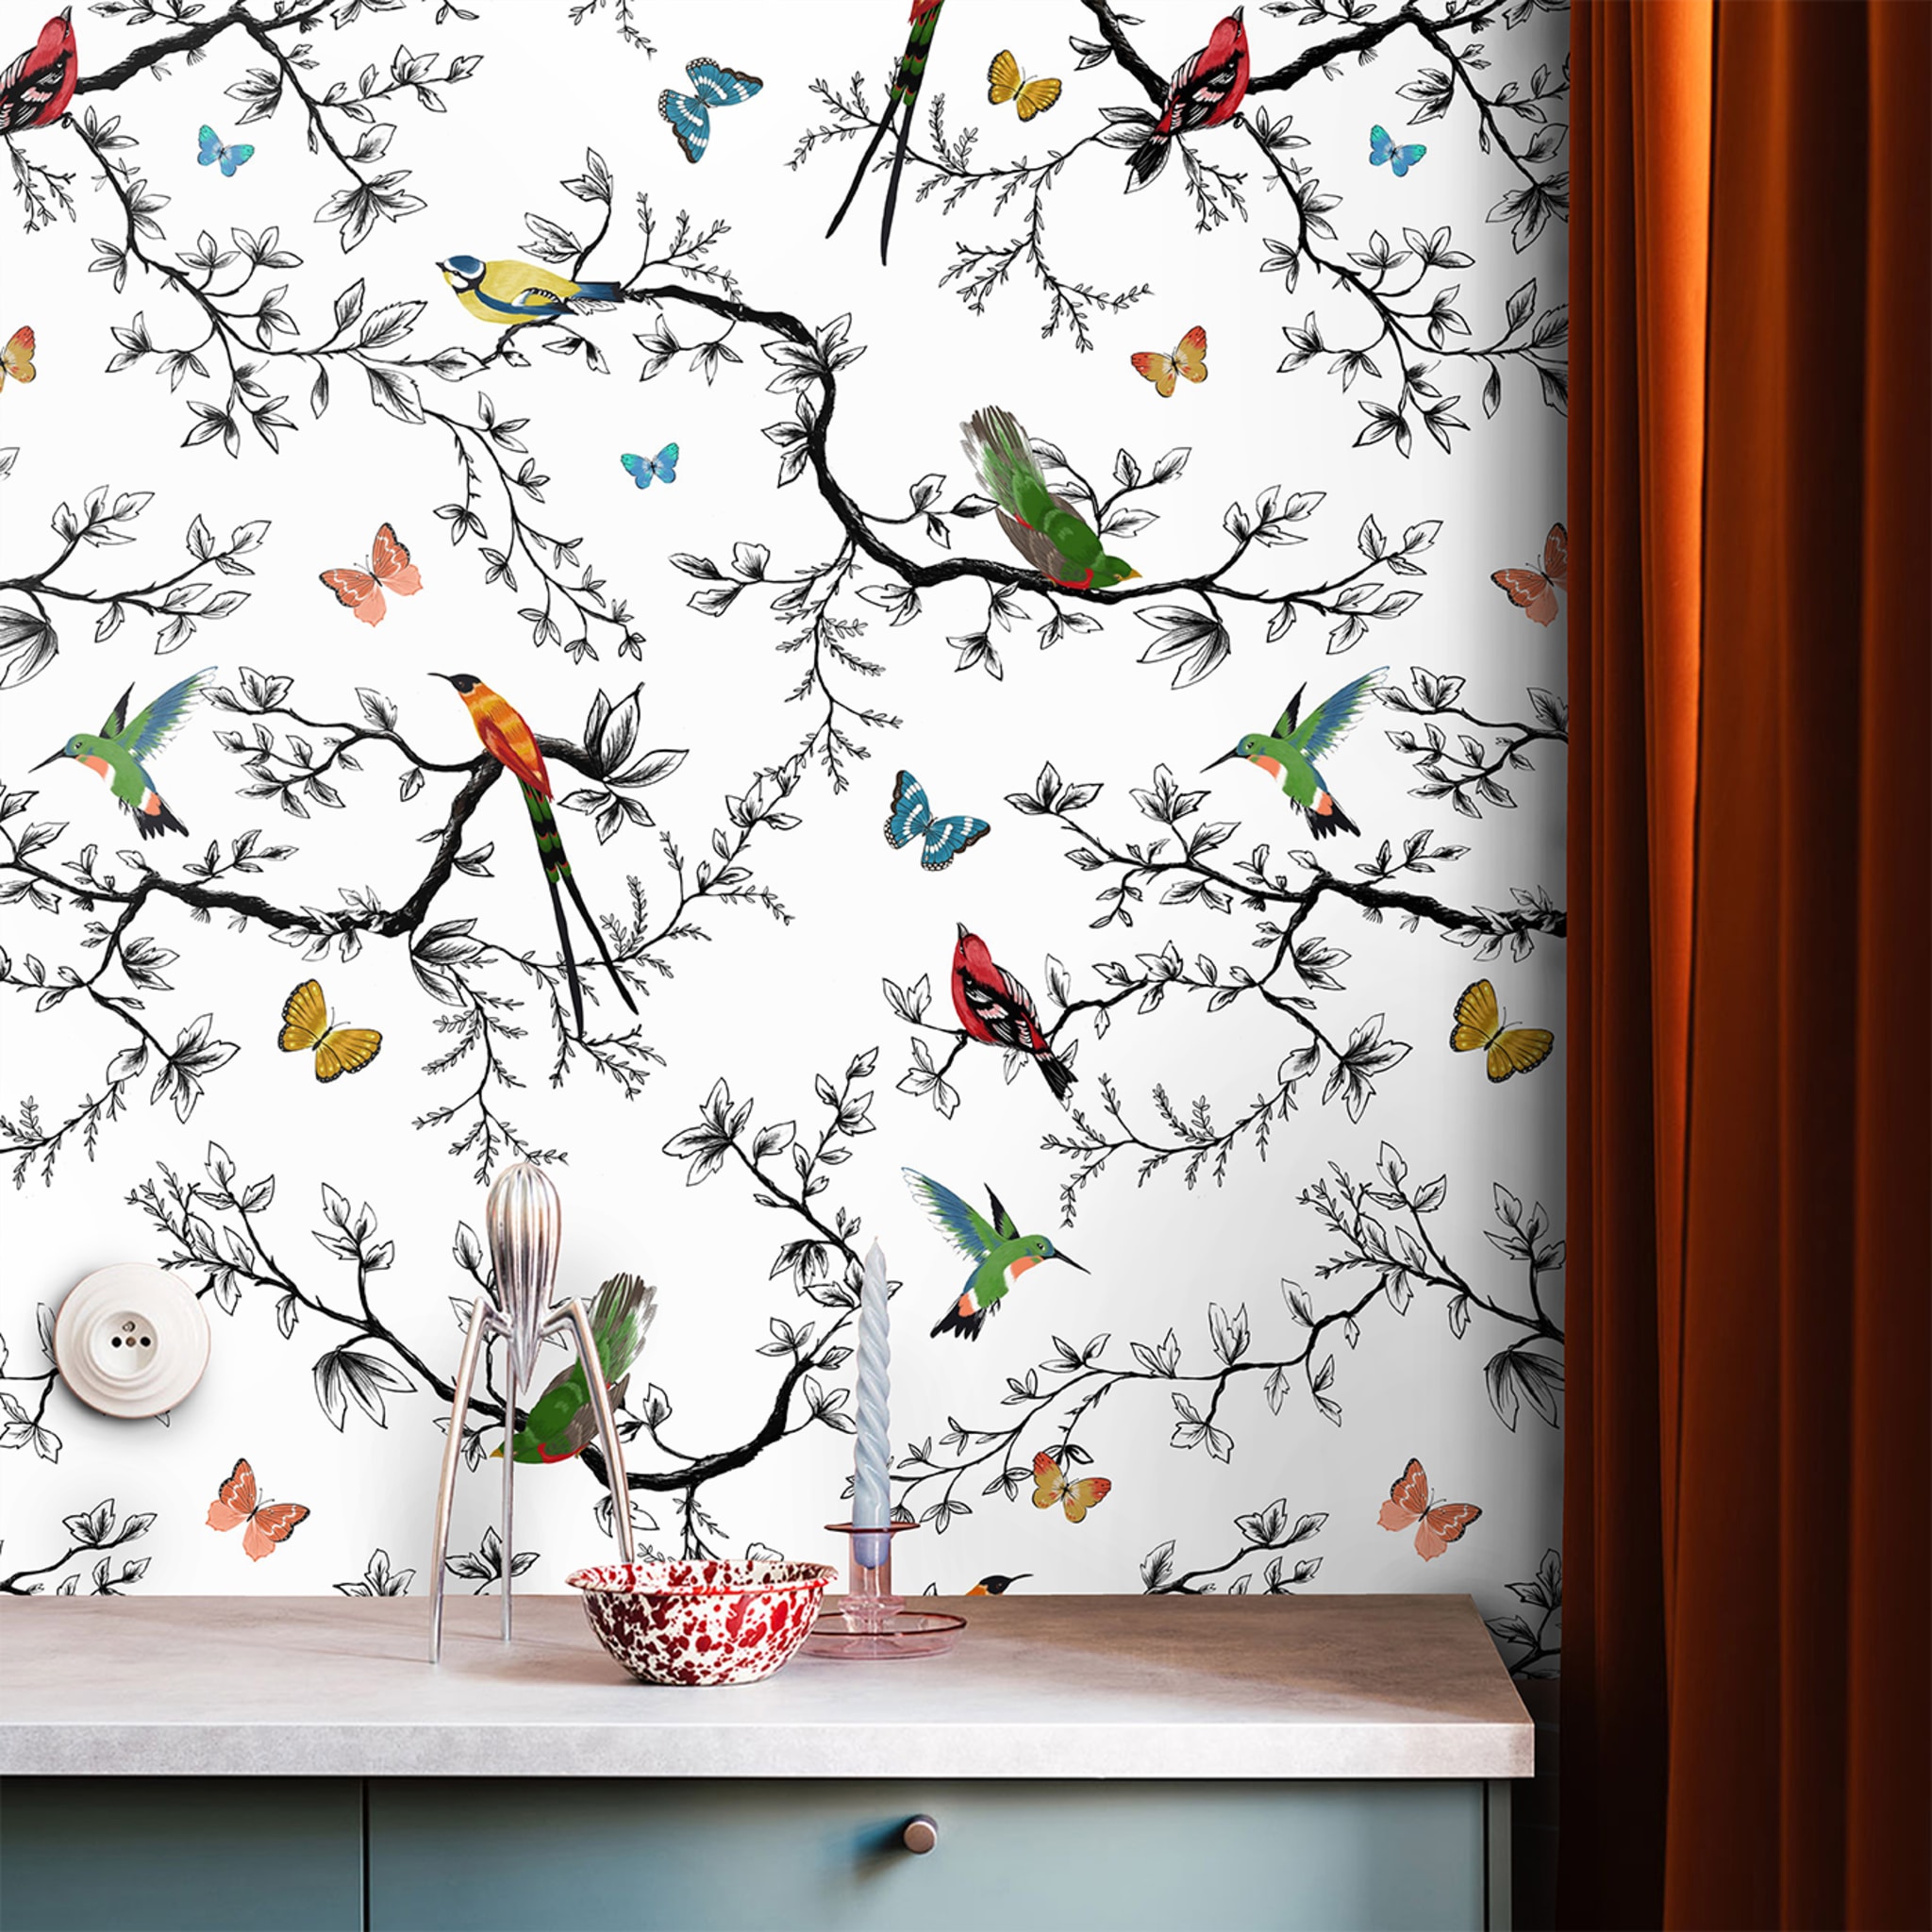 Whimsical Birds and Butterflies Wallpaper - Alternative view 4